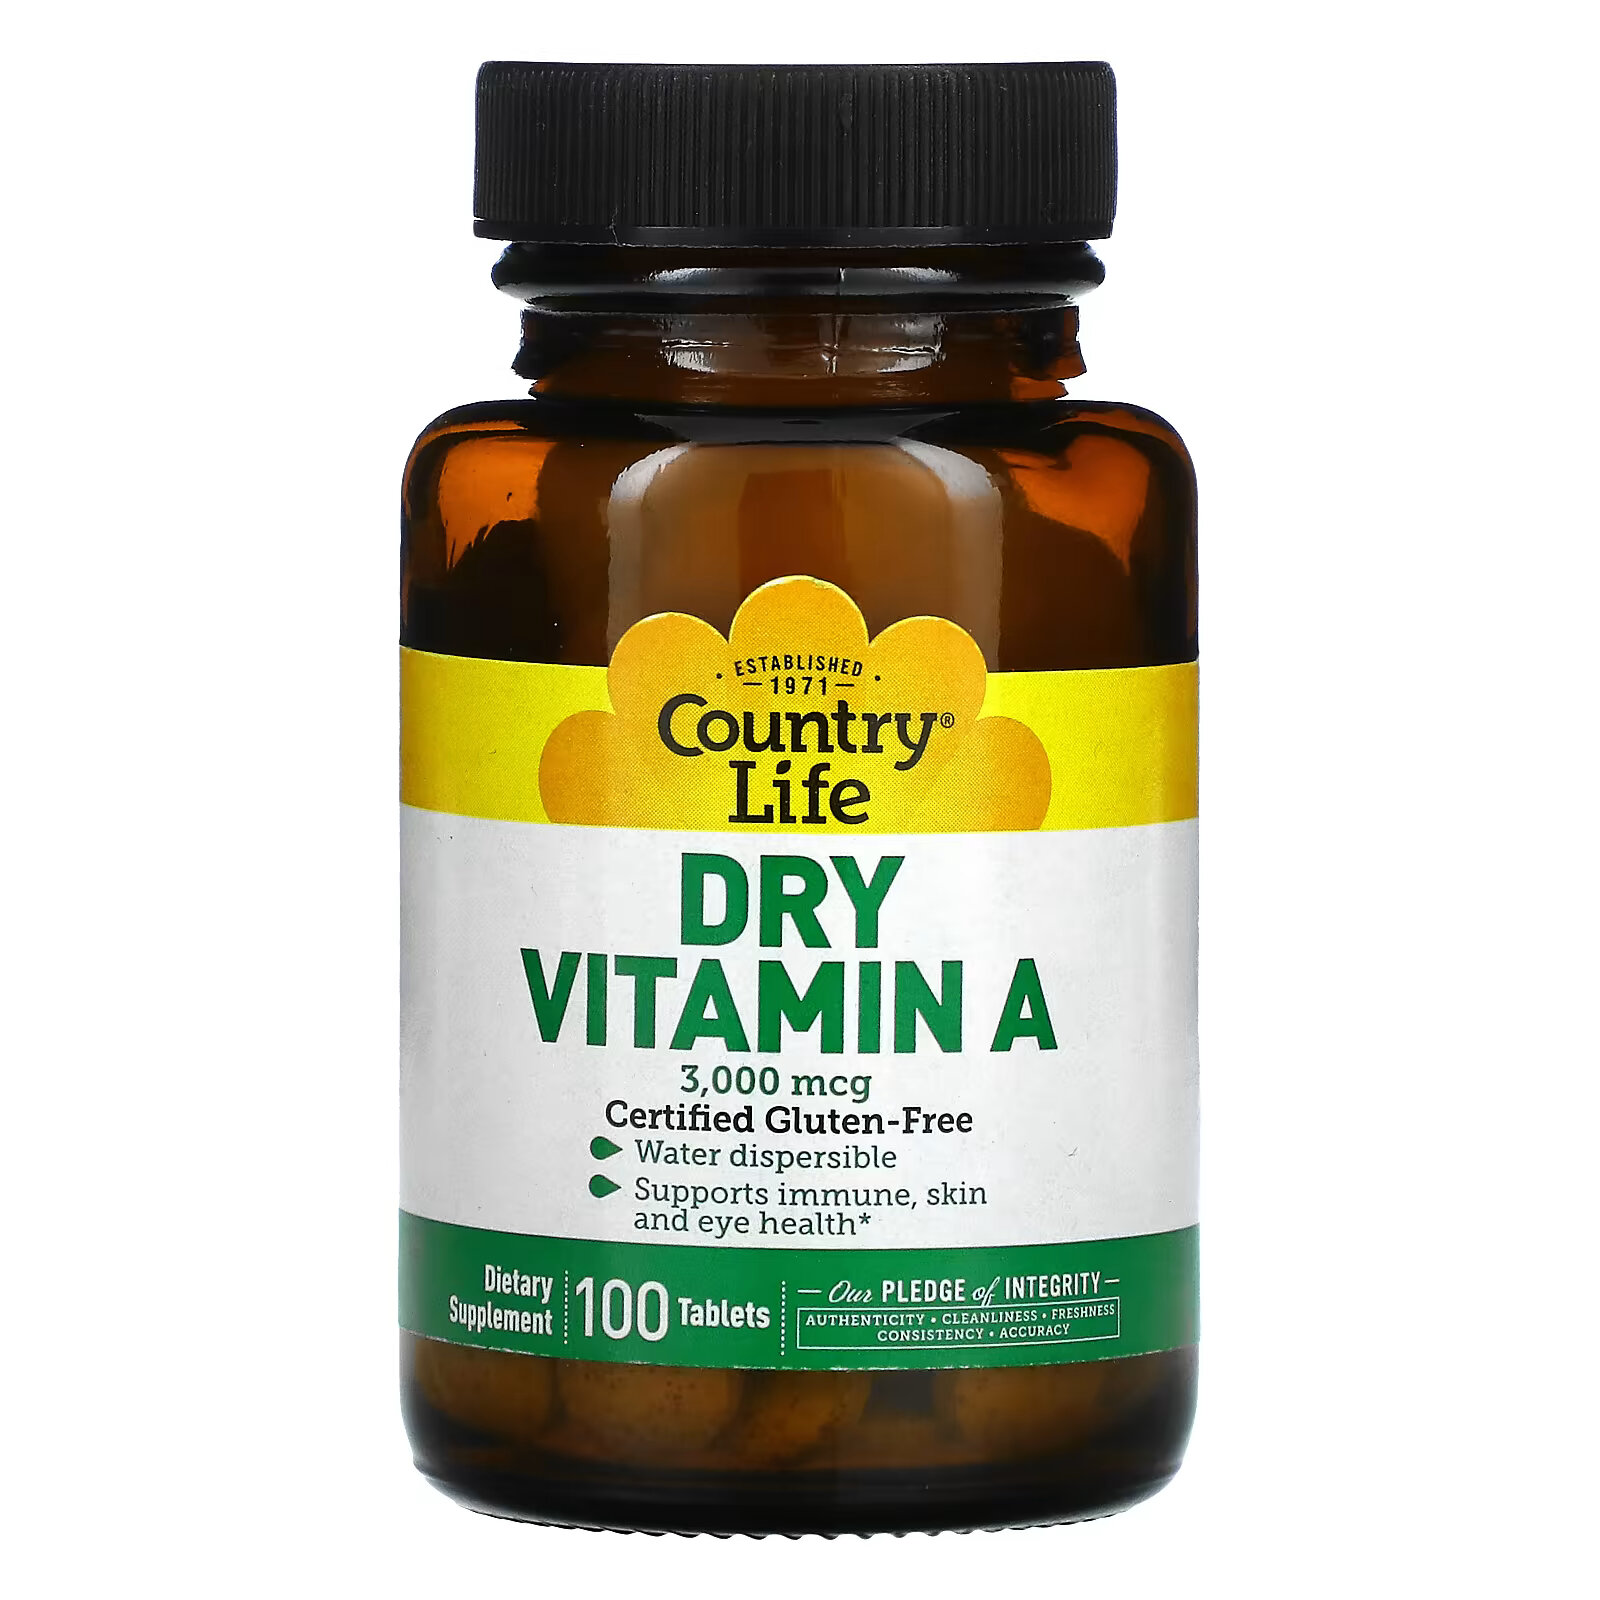 country life витамин в12 1000 мкг 60 таблеток Country Life, Сухой витамин A, 3000 мкг, 100 таблеток